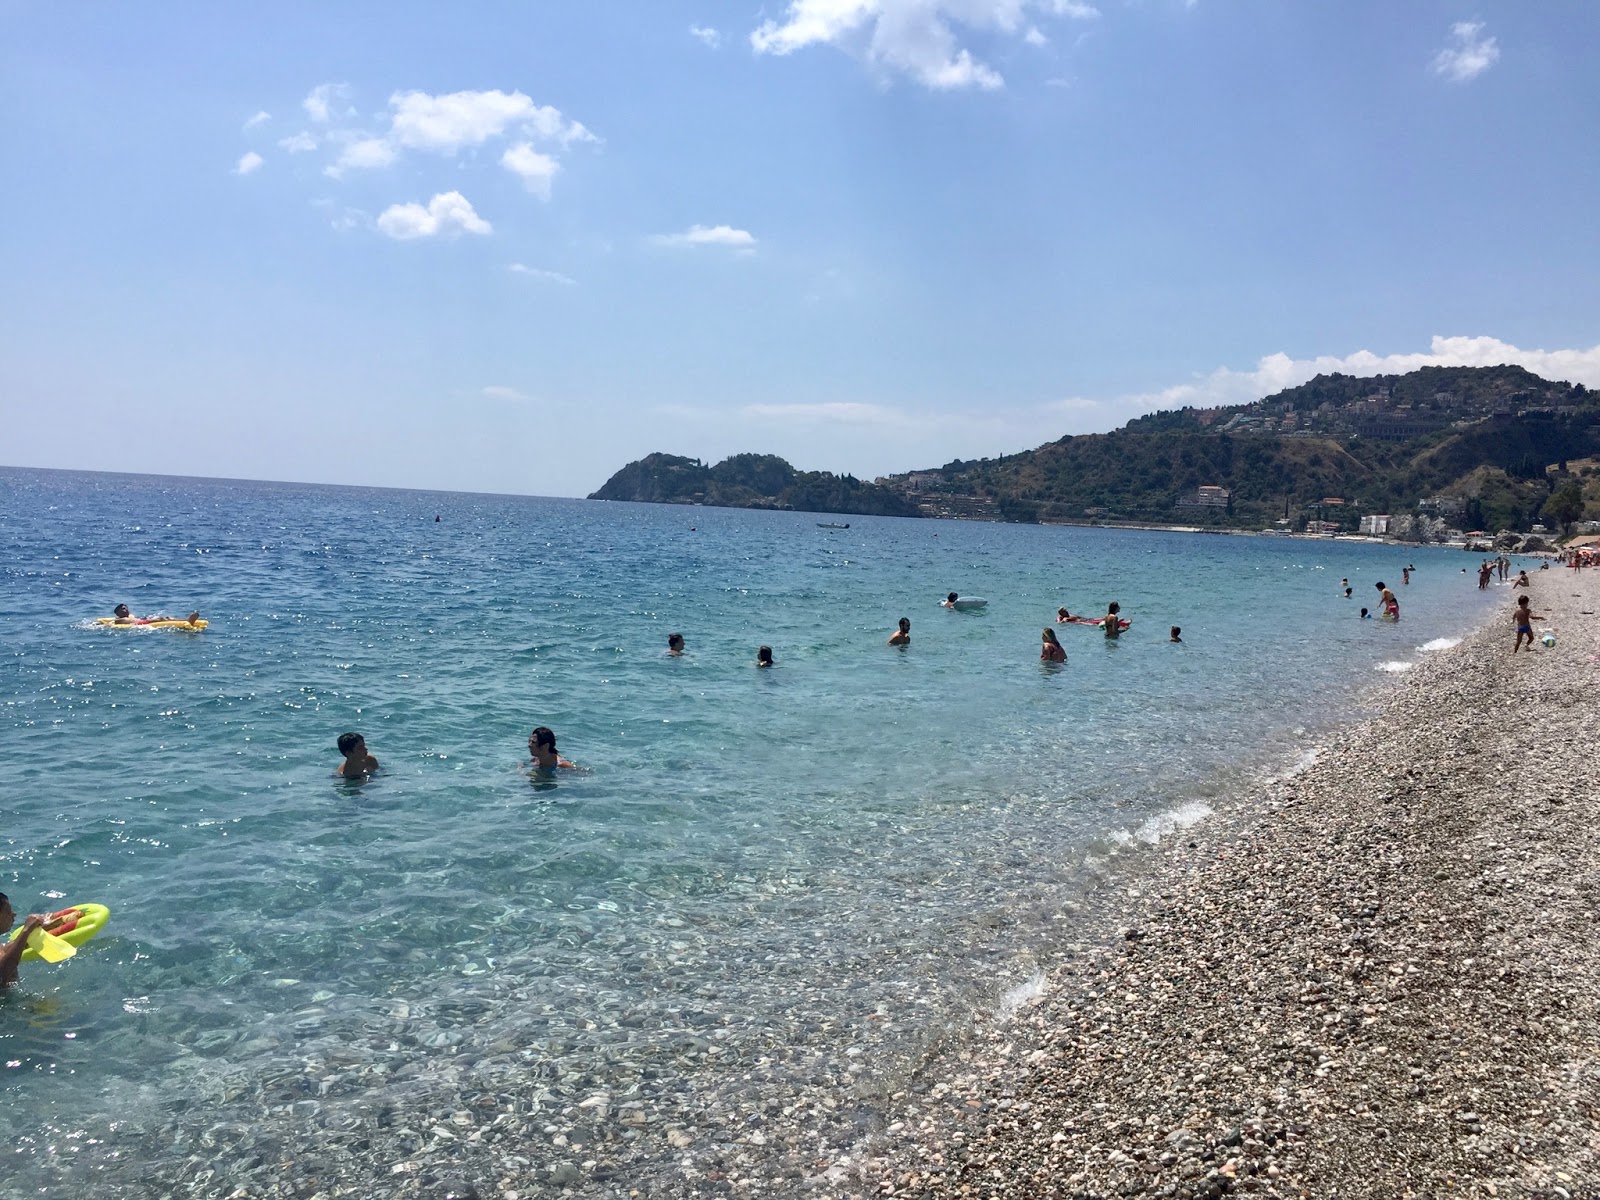 Spiaggia di Mazzeo'in fotoğrafı turkuaz saf su yüzey ile